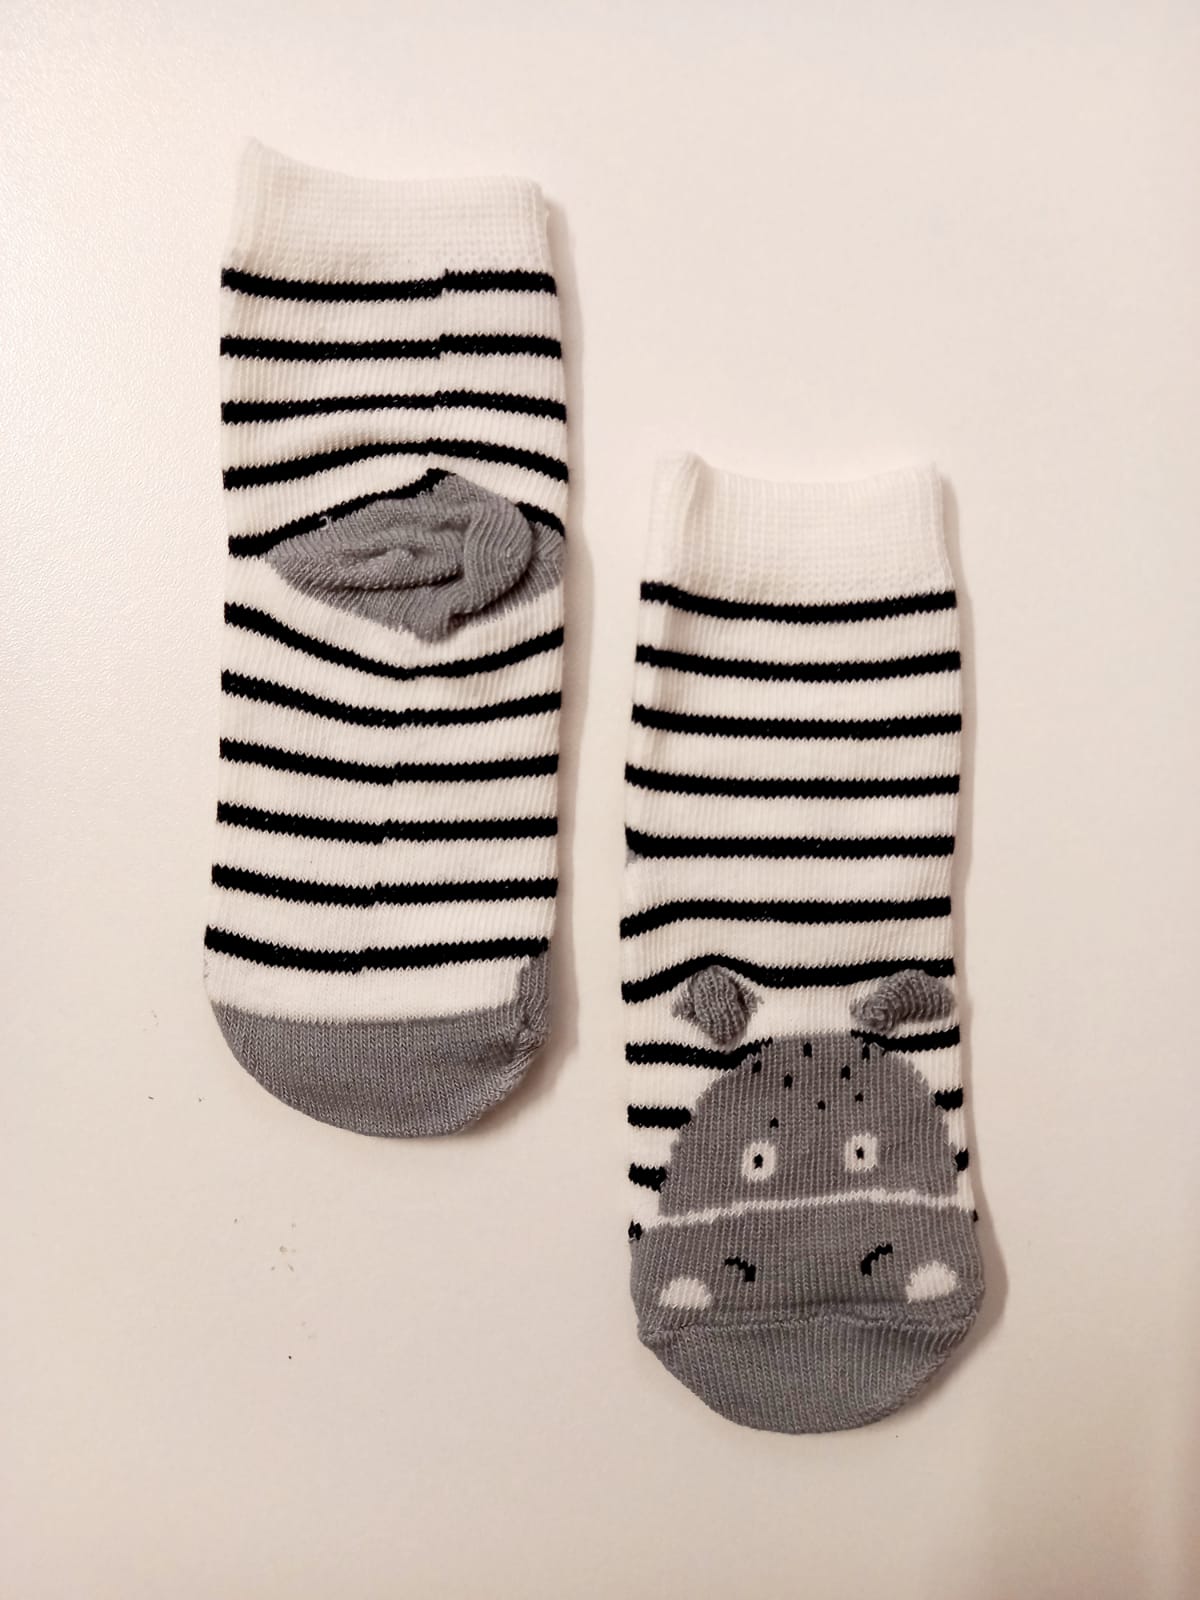 Rhino Themed Socks